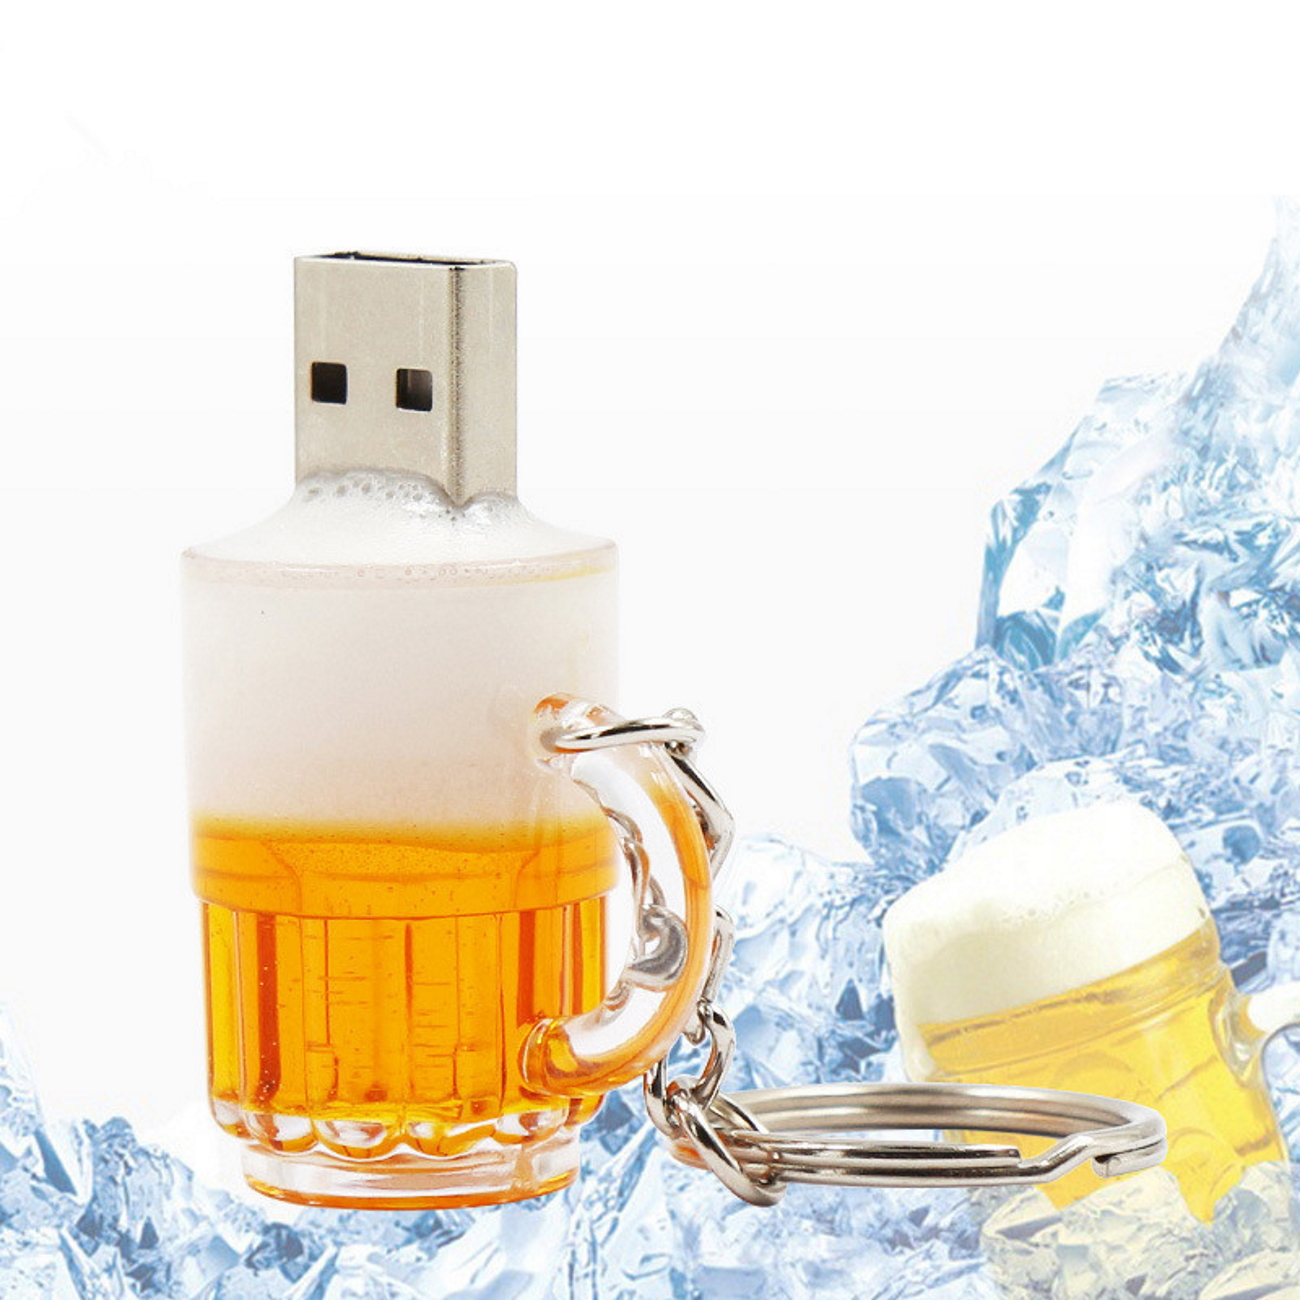 USB GERMANY ® Bierkrug GB) USB-Stick (Mehrfarbig, 1